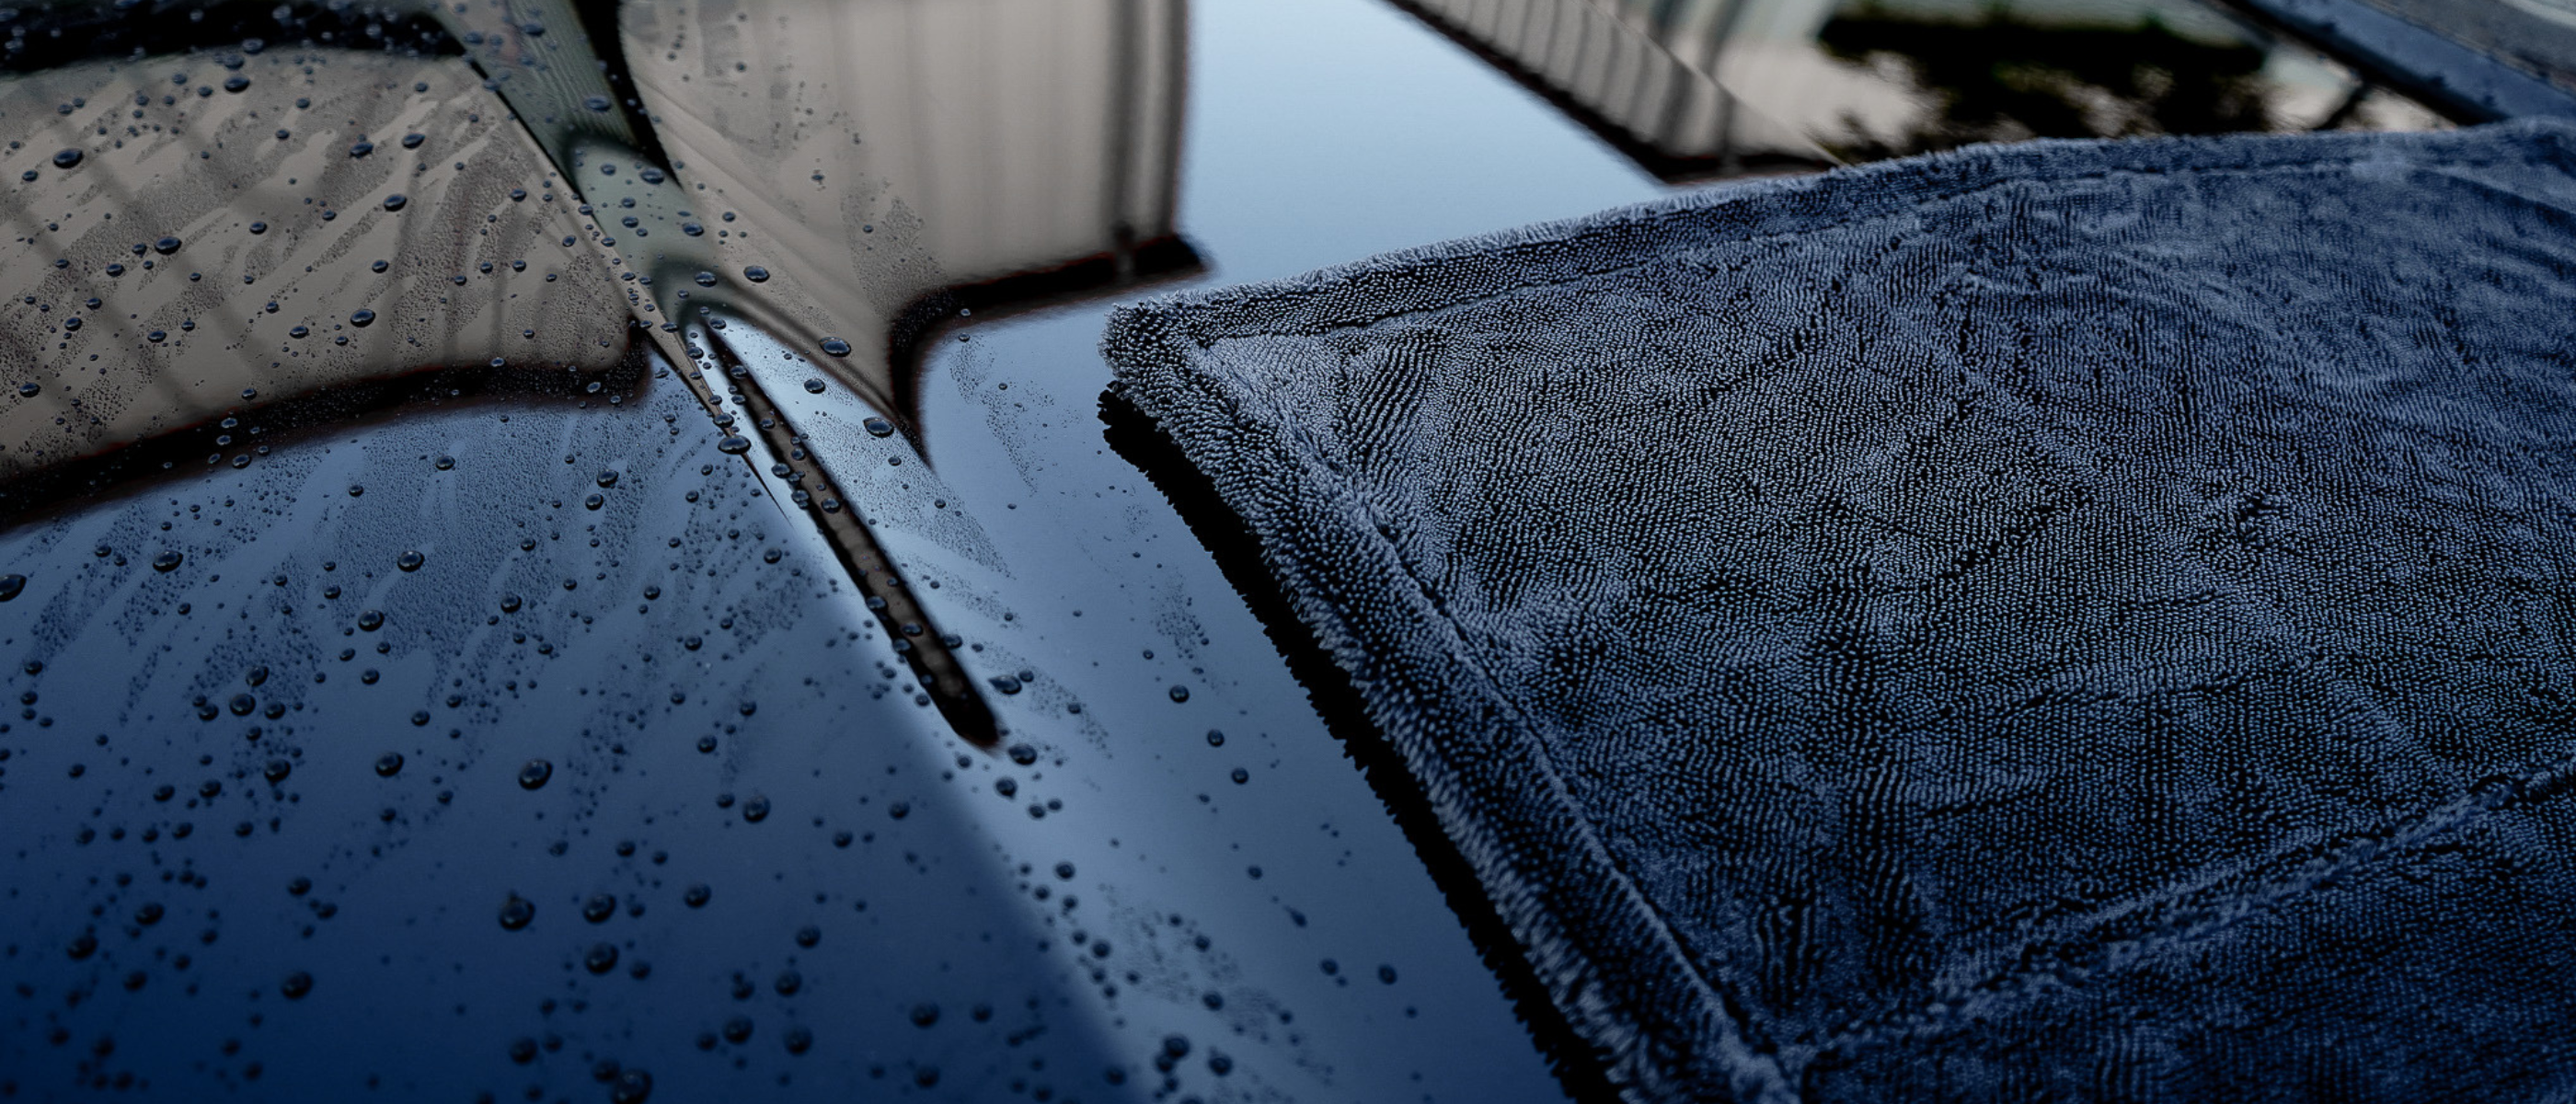  Blackline Car Care XL 3ft x 2ft, Ultra-Absorbant Microfiber Car Drying  Towel Twisted Loop Car Drying Towel Extra Large - #1 Rated Car Drying Towel  : Automotive